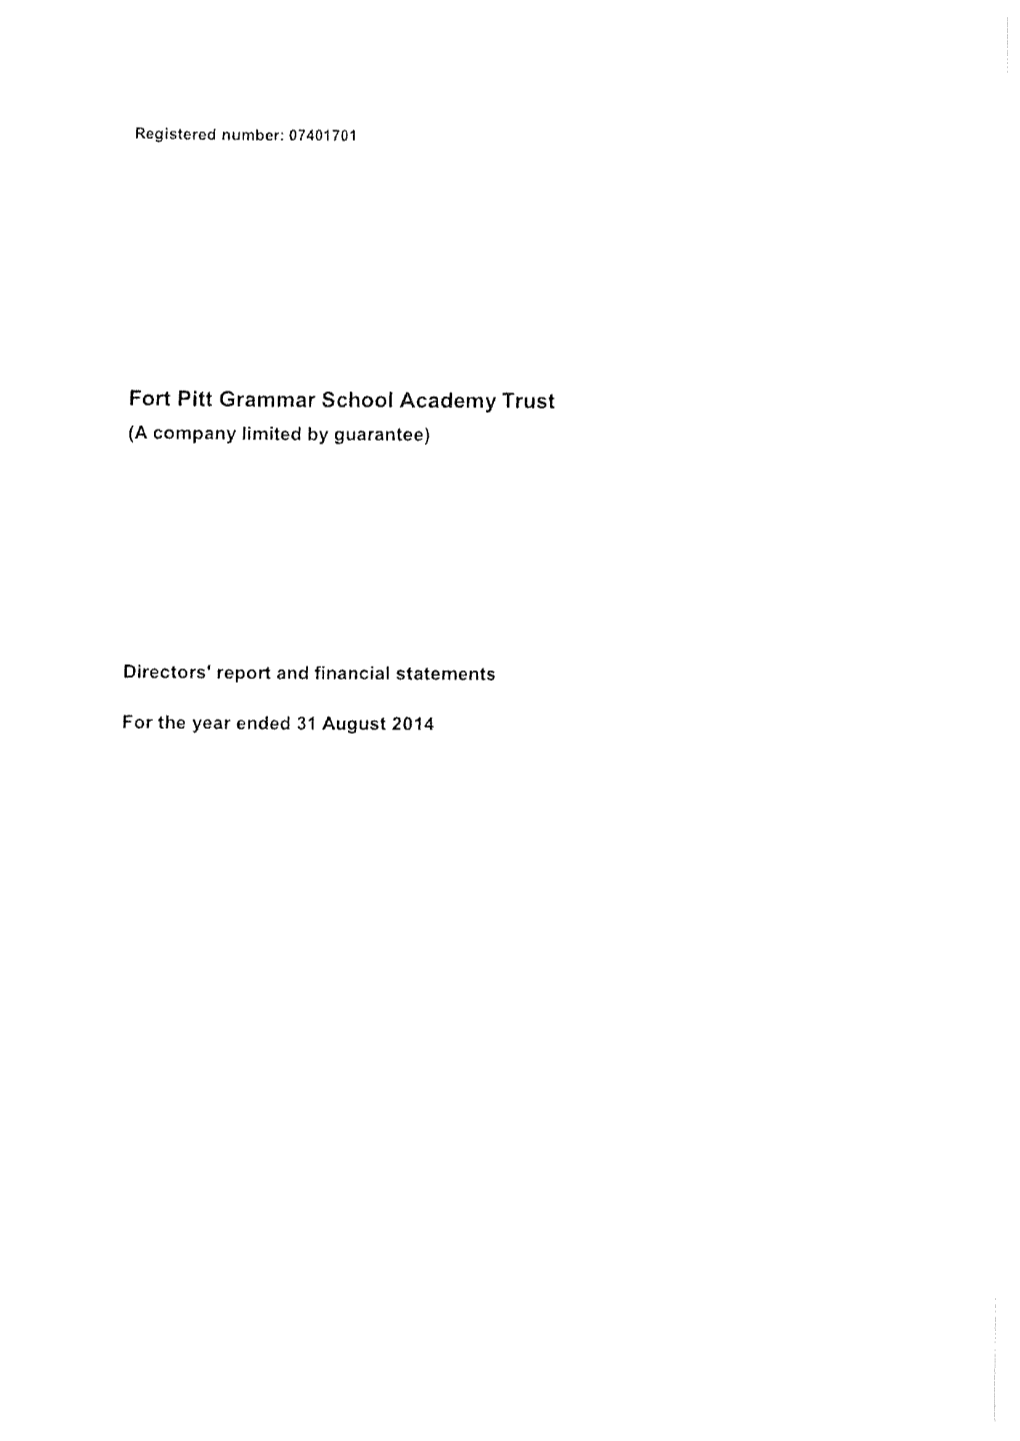 Fort Pitt Grammar School Academy Trust (A Company Limited by Guarantee)